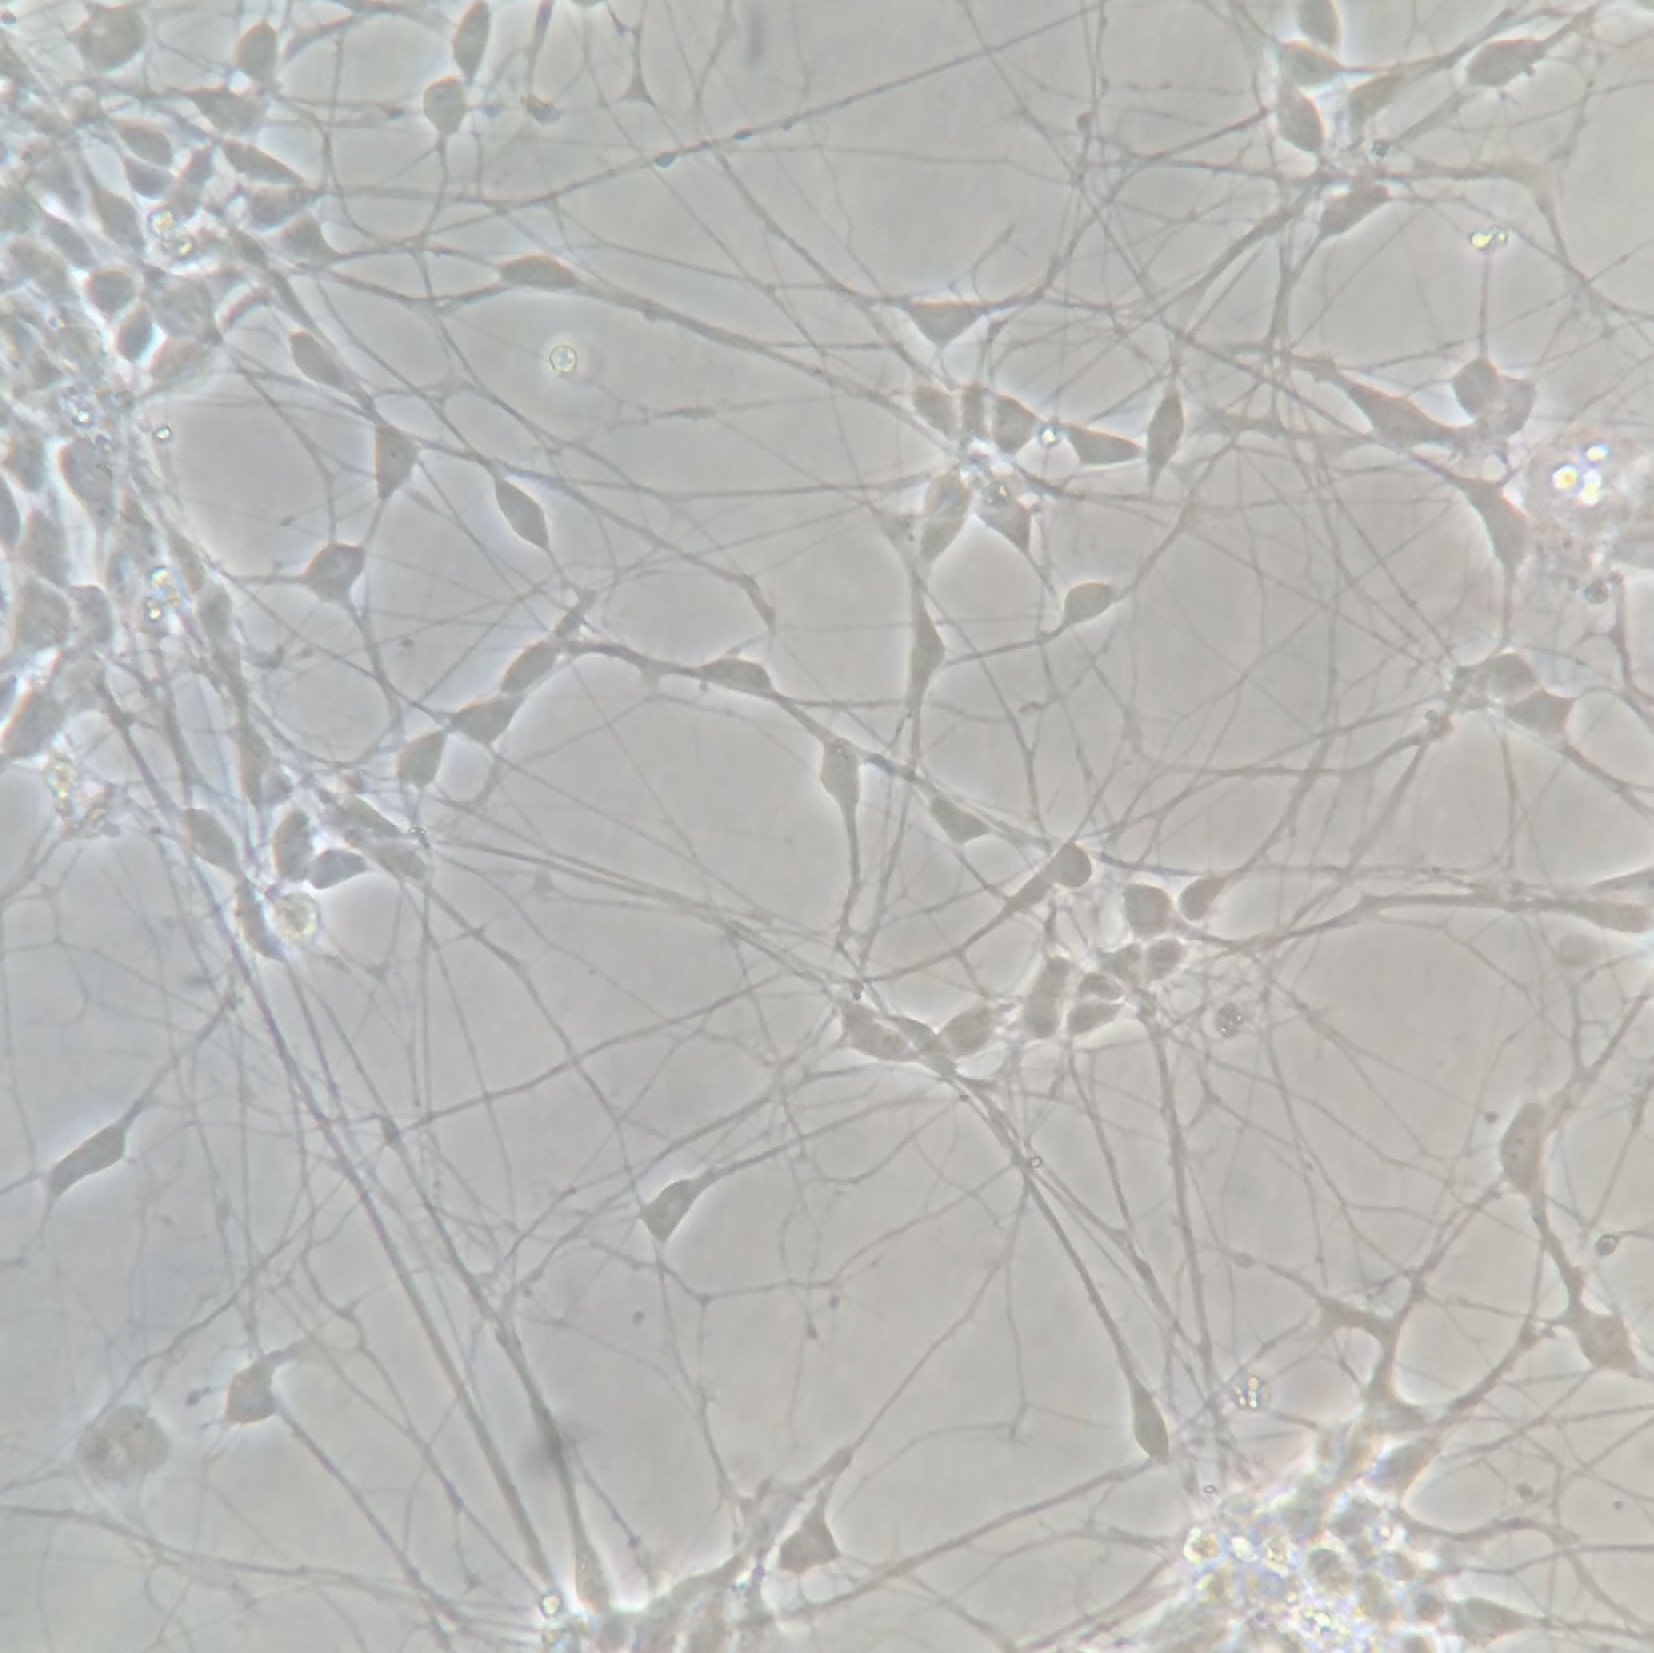 ARSACS neurons